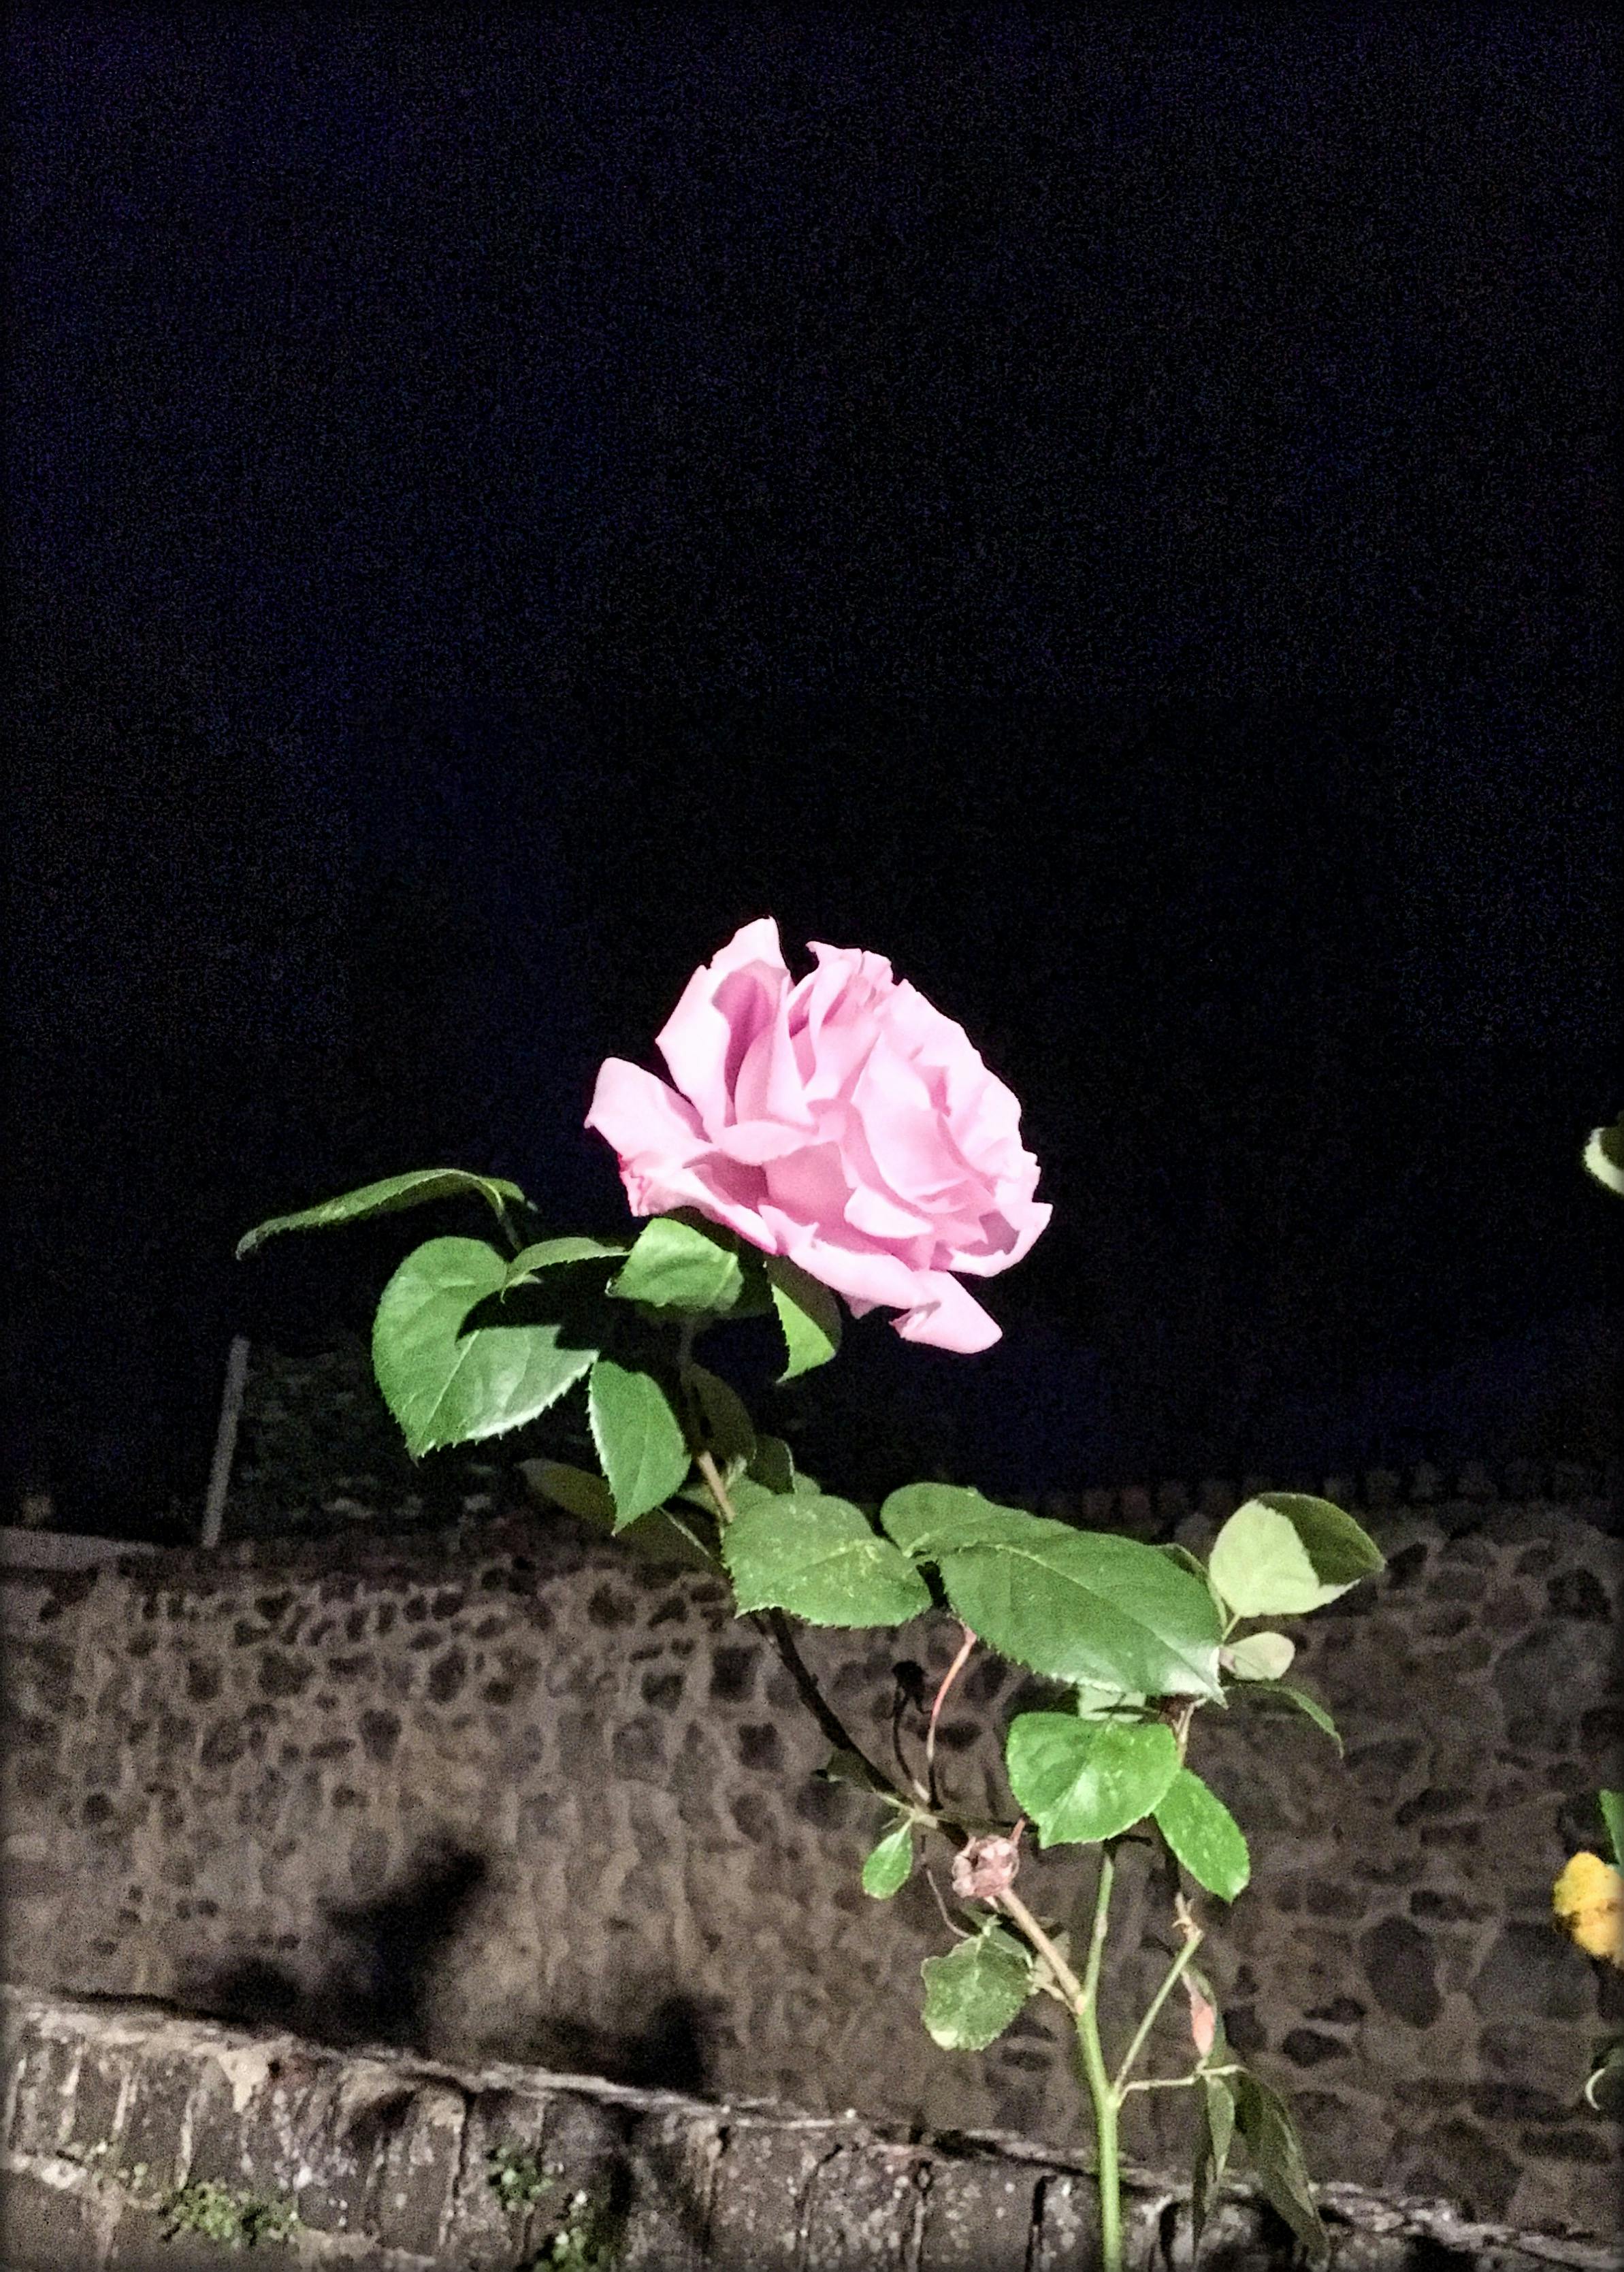 Free stock photo of Night flower, pink, pink flower